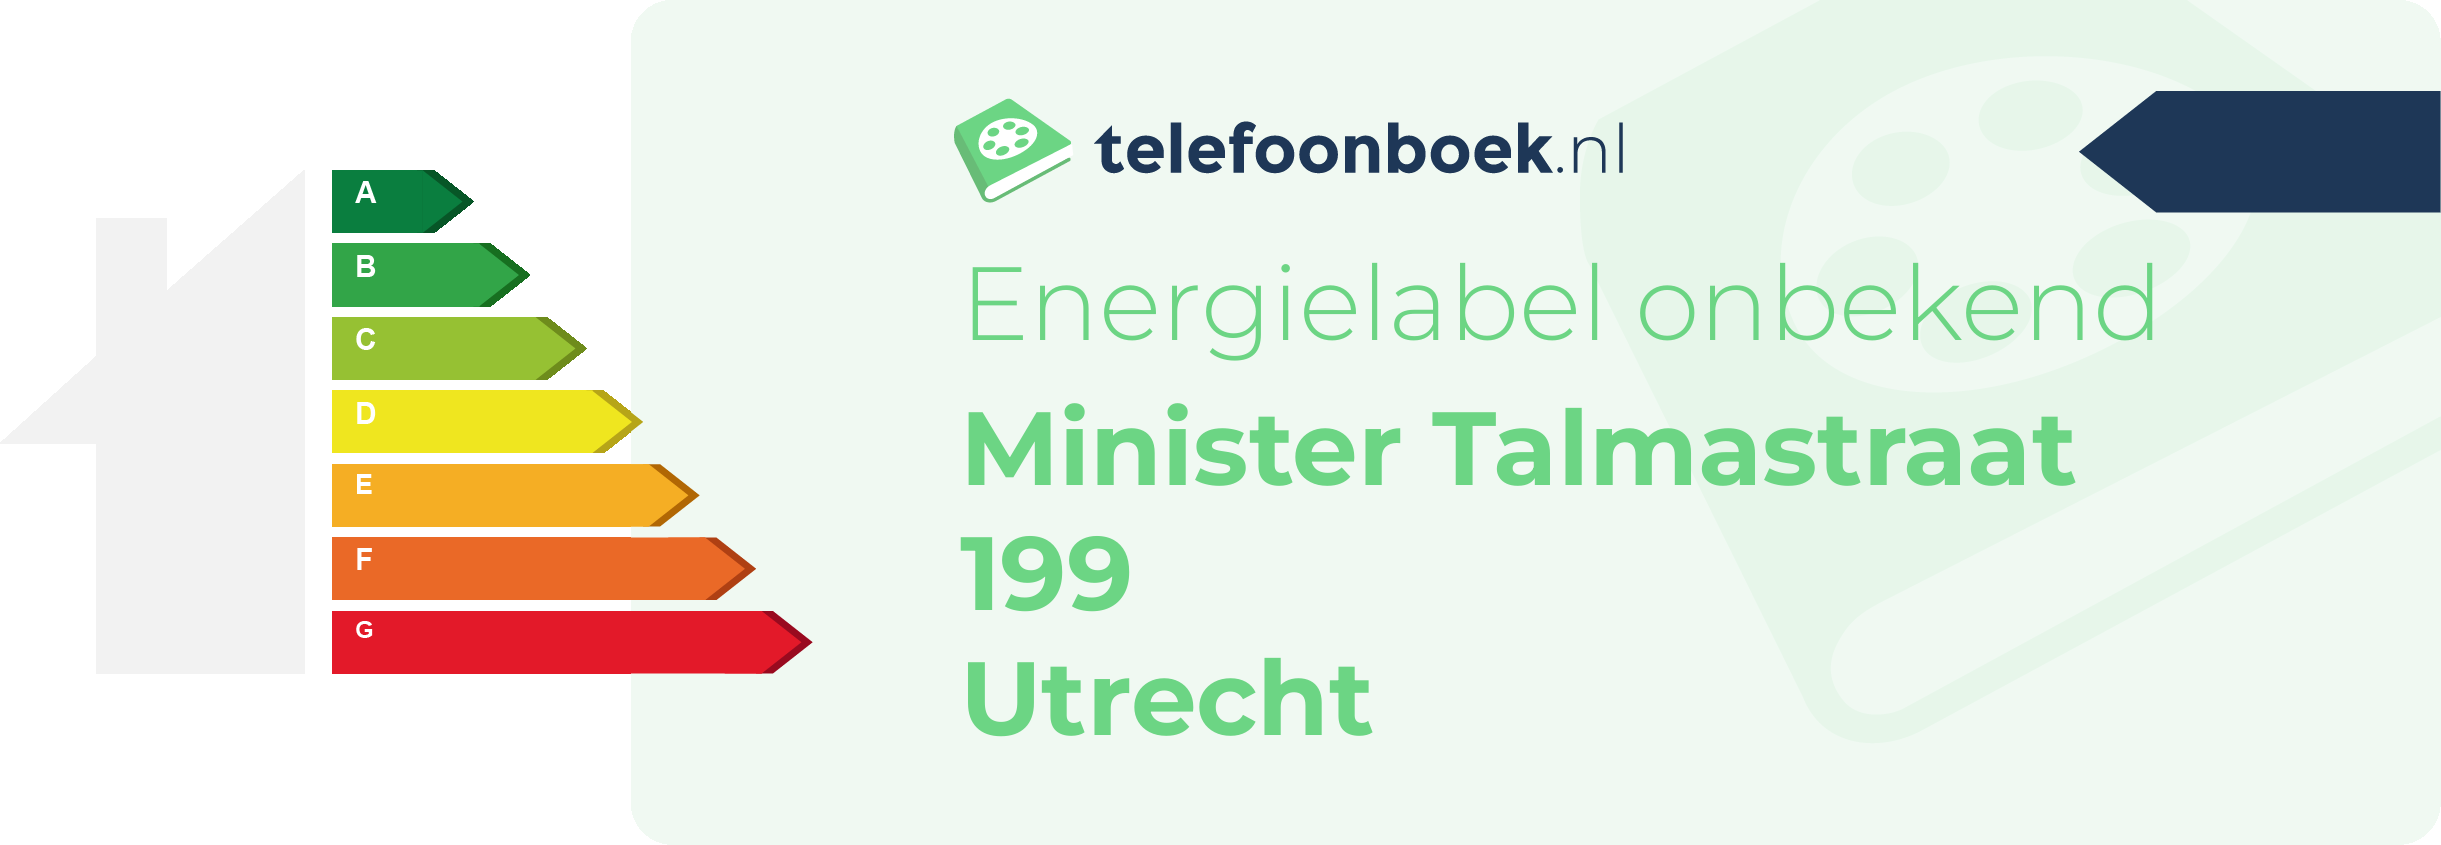 Energielabel Minister Talmastraat 199 Utrecht